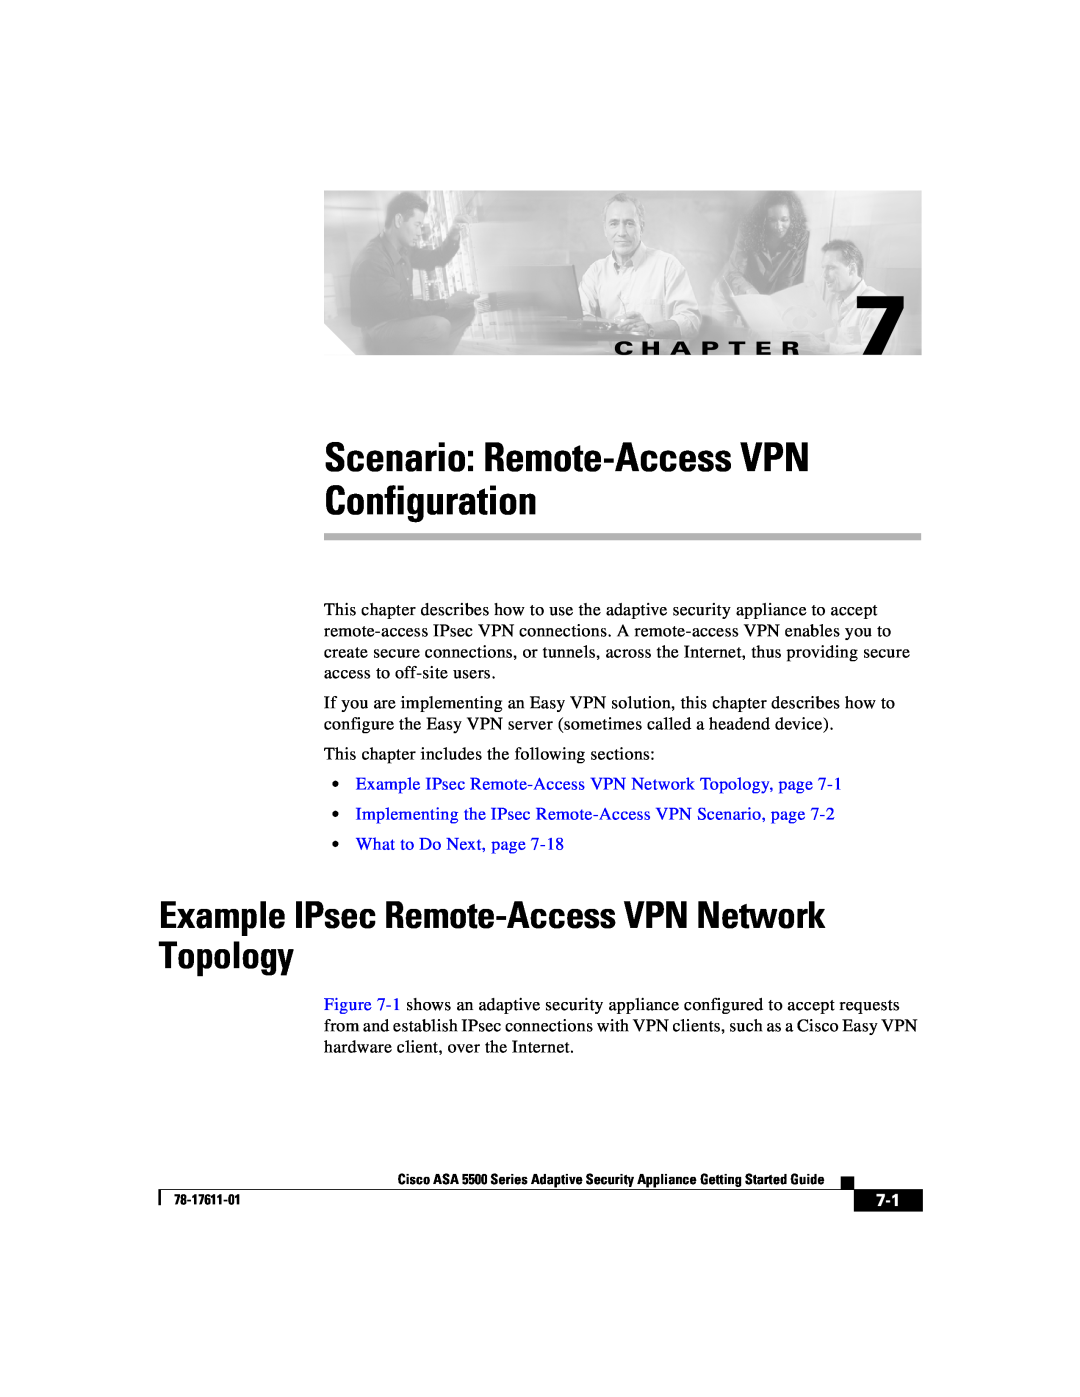 Cisco Systems ASA 5500 manual Scenario: Remote-AccessVPN Configuration, Example IPsec Remote-AccessVPN Network Topology 